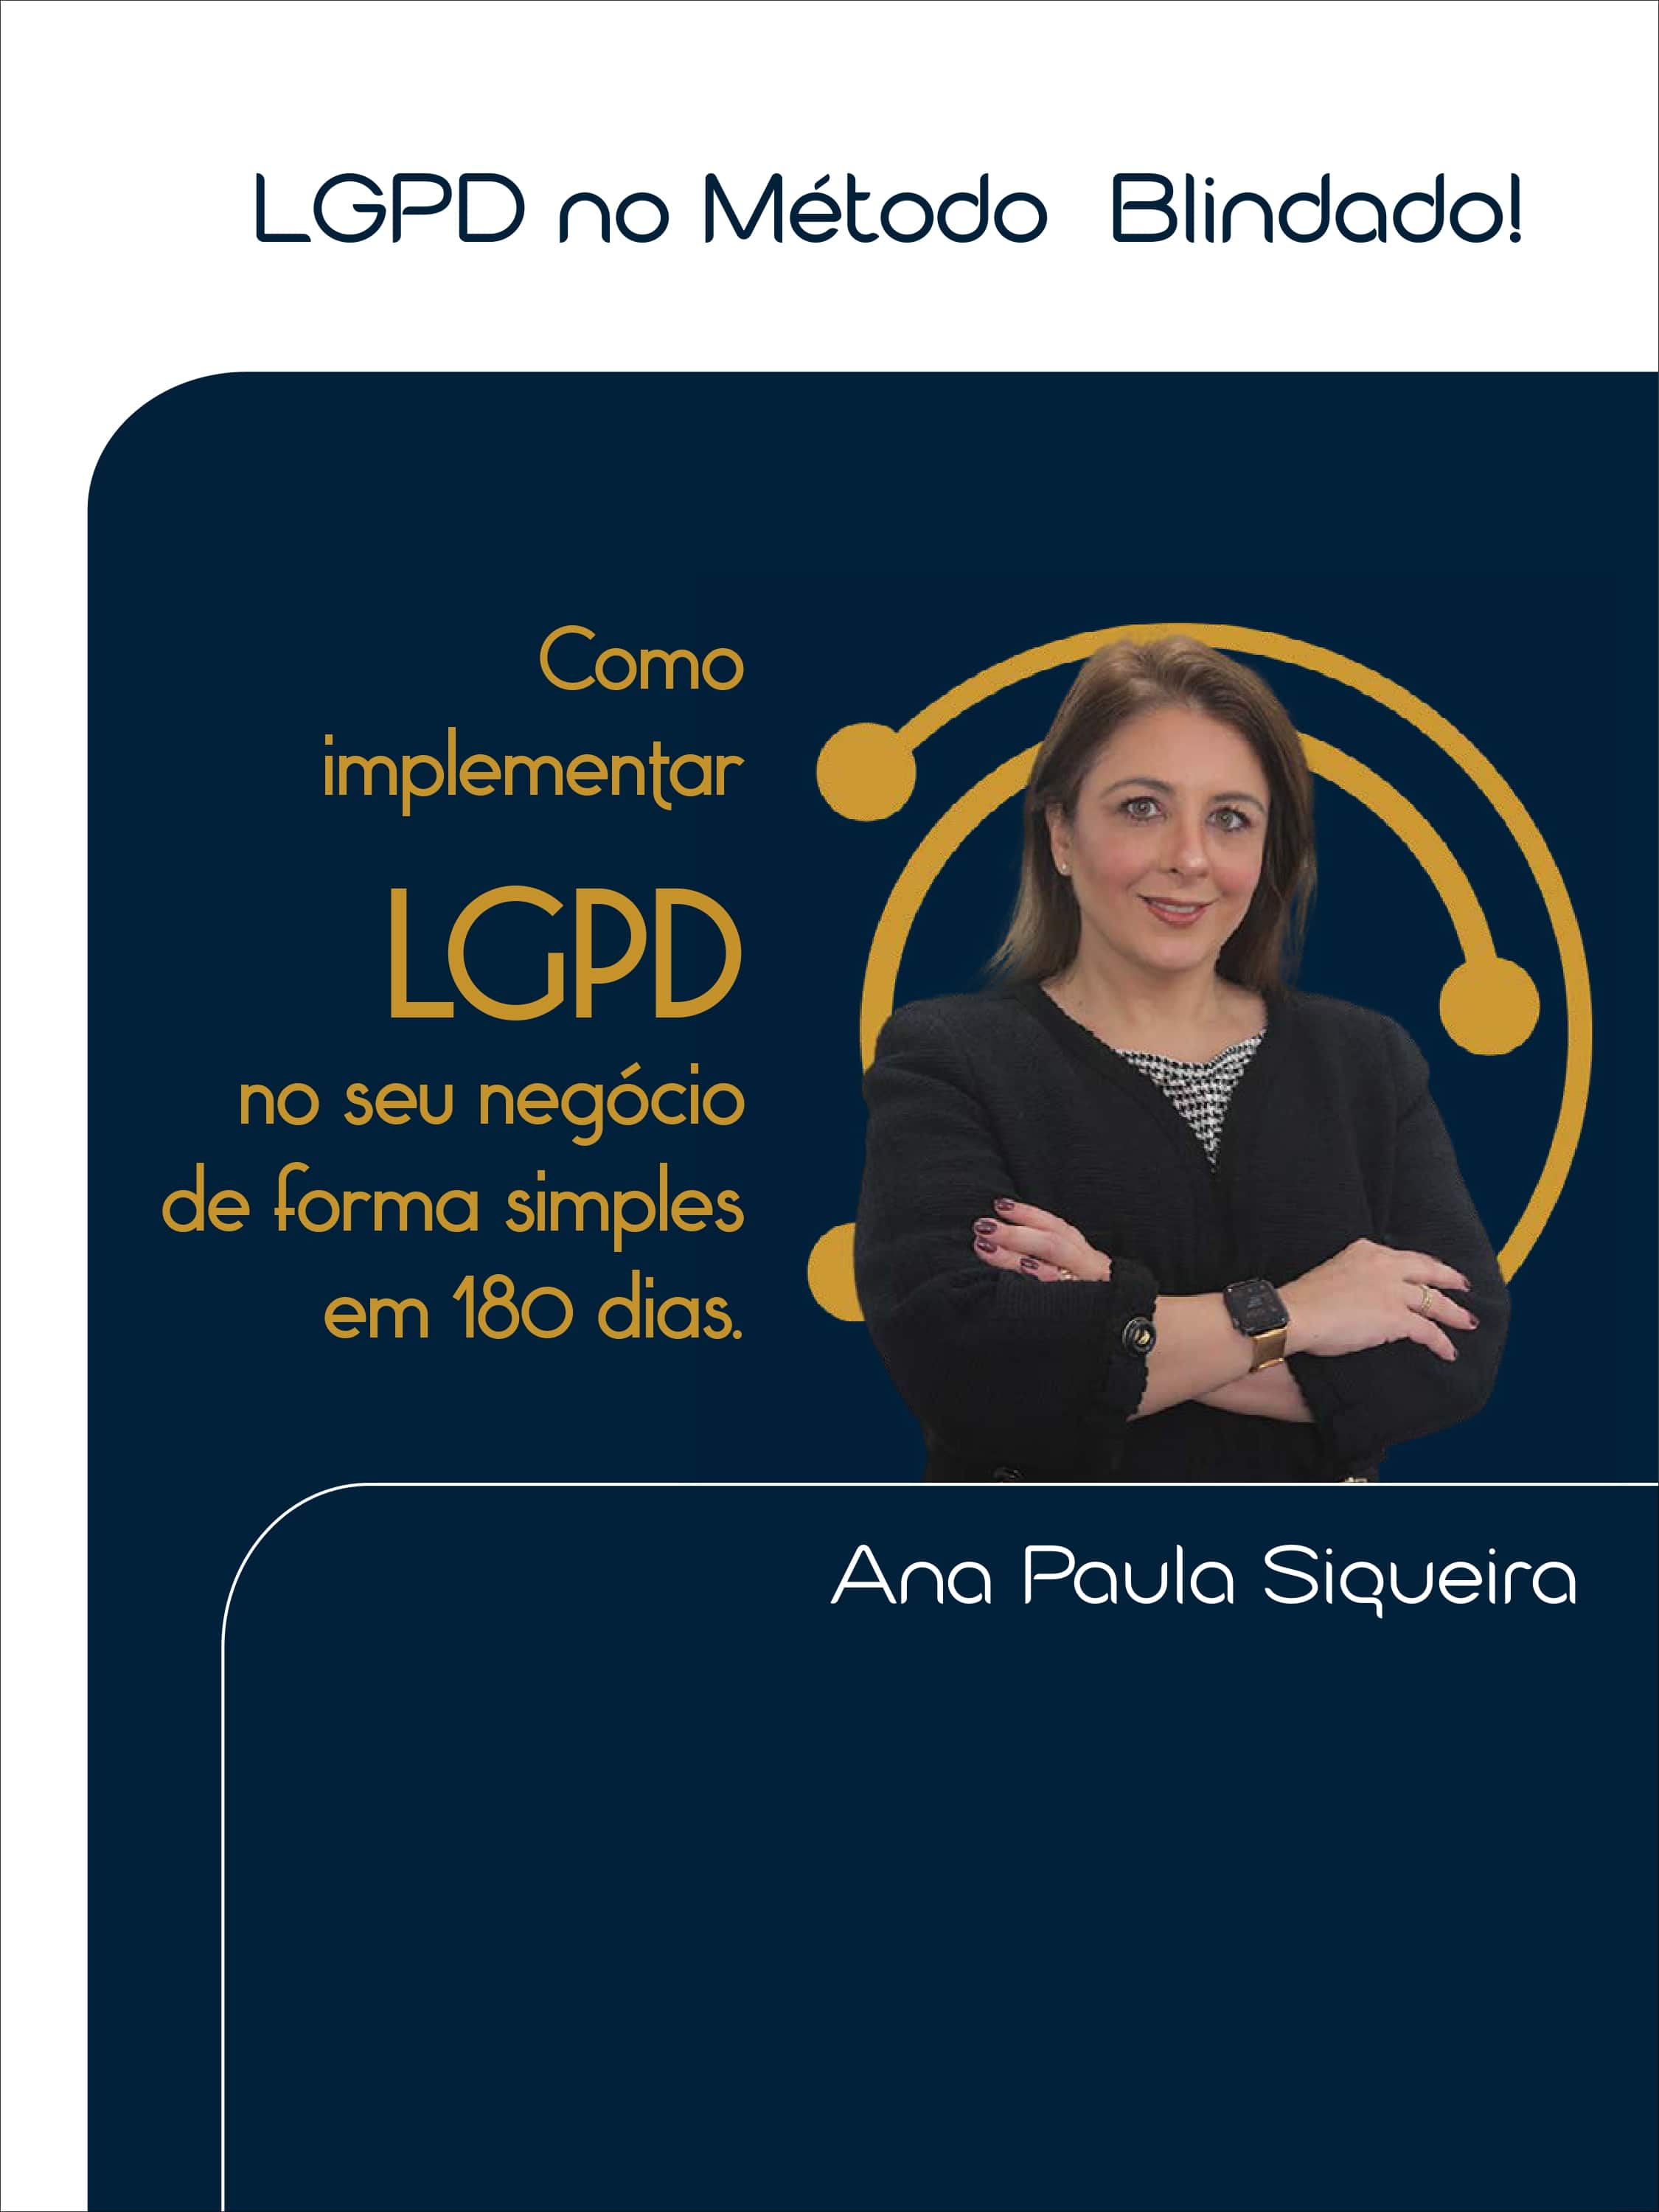 E-book: LGPD MÉTODO BLINDADO (Ana Paula Siqueira)